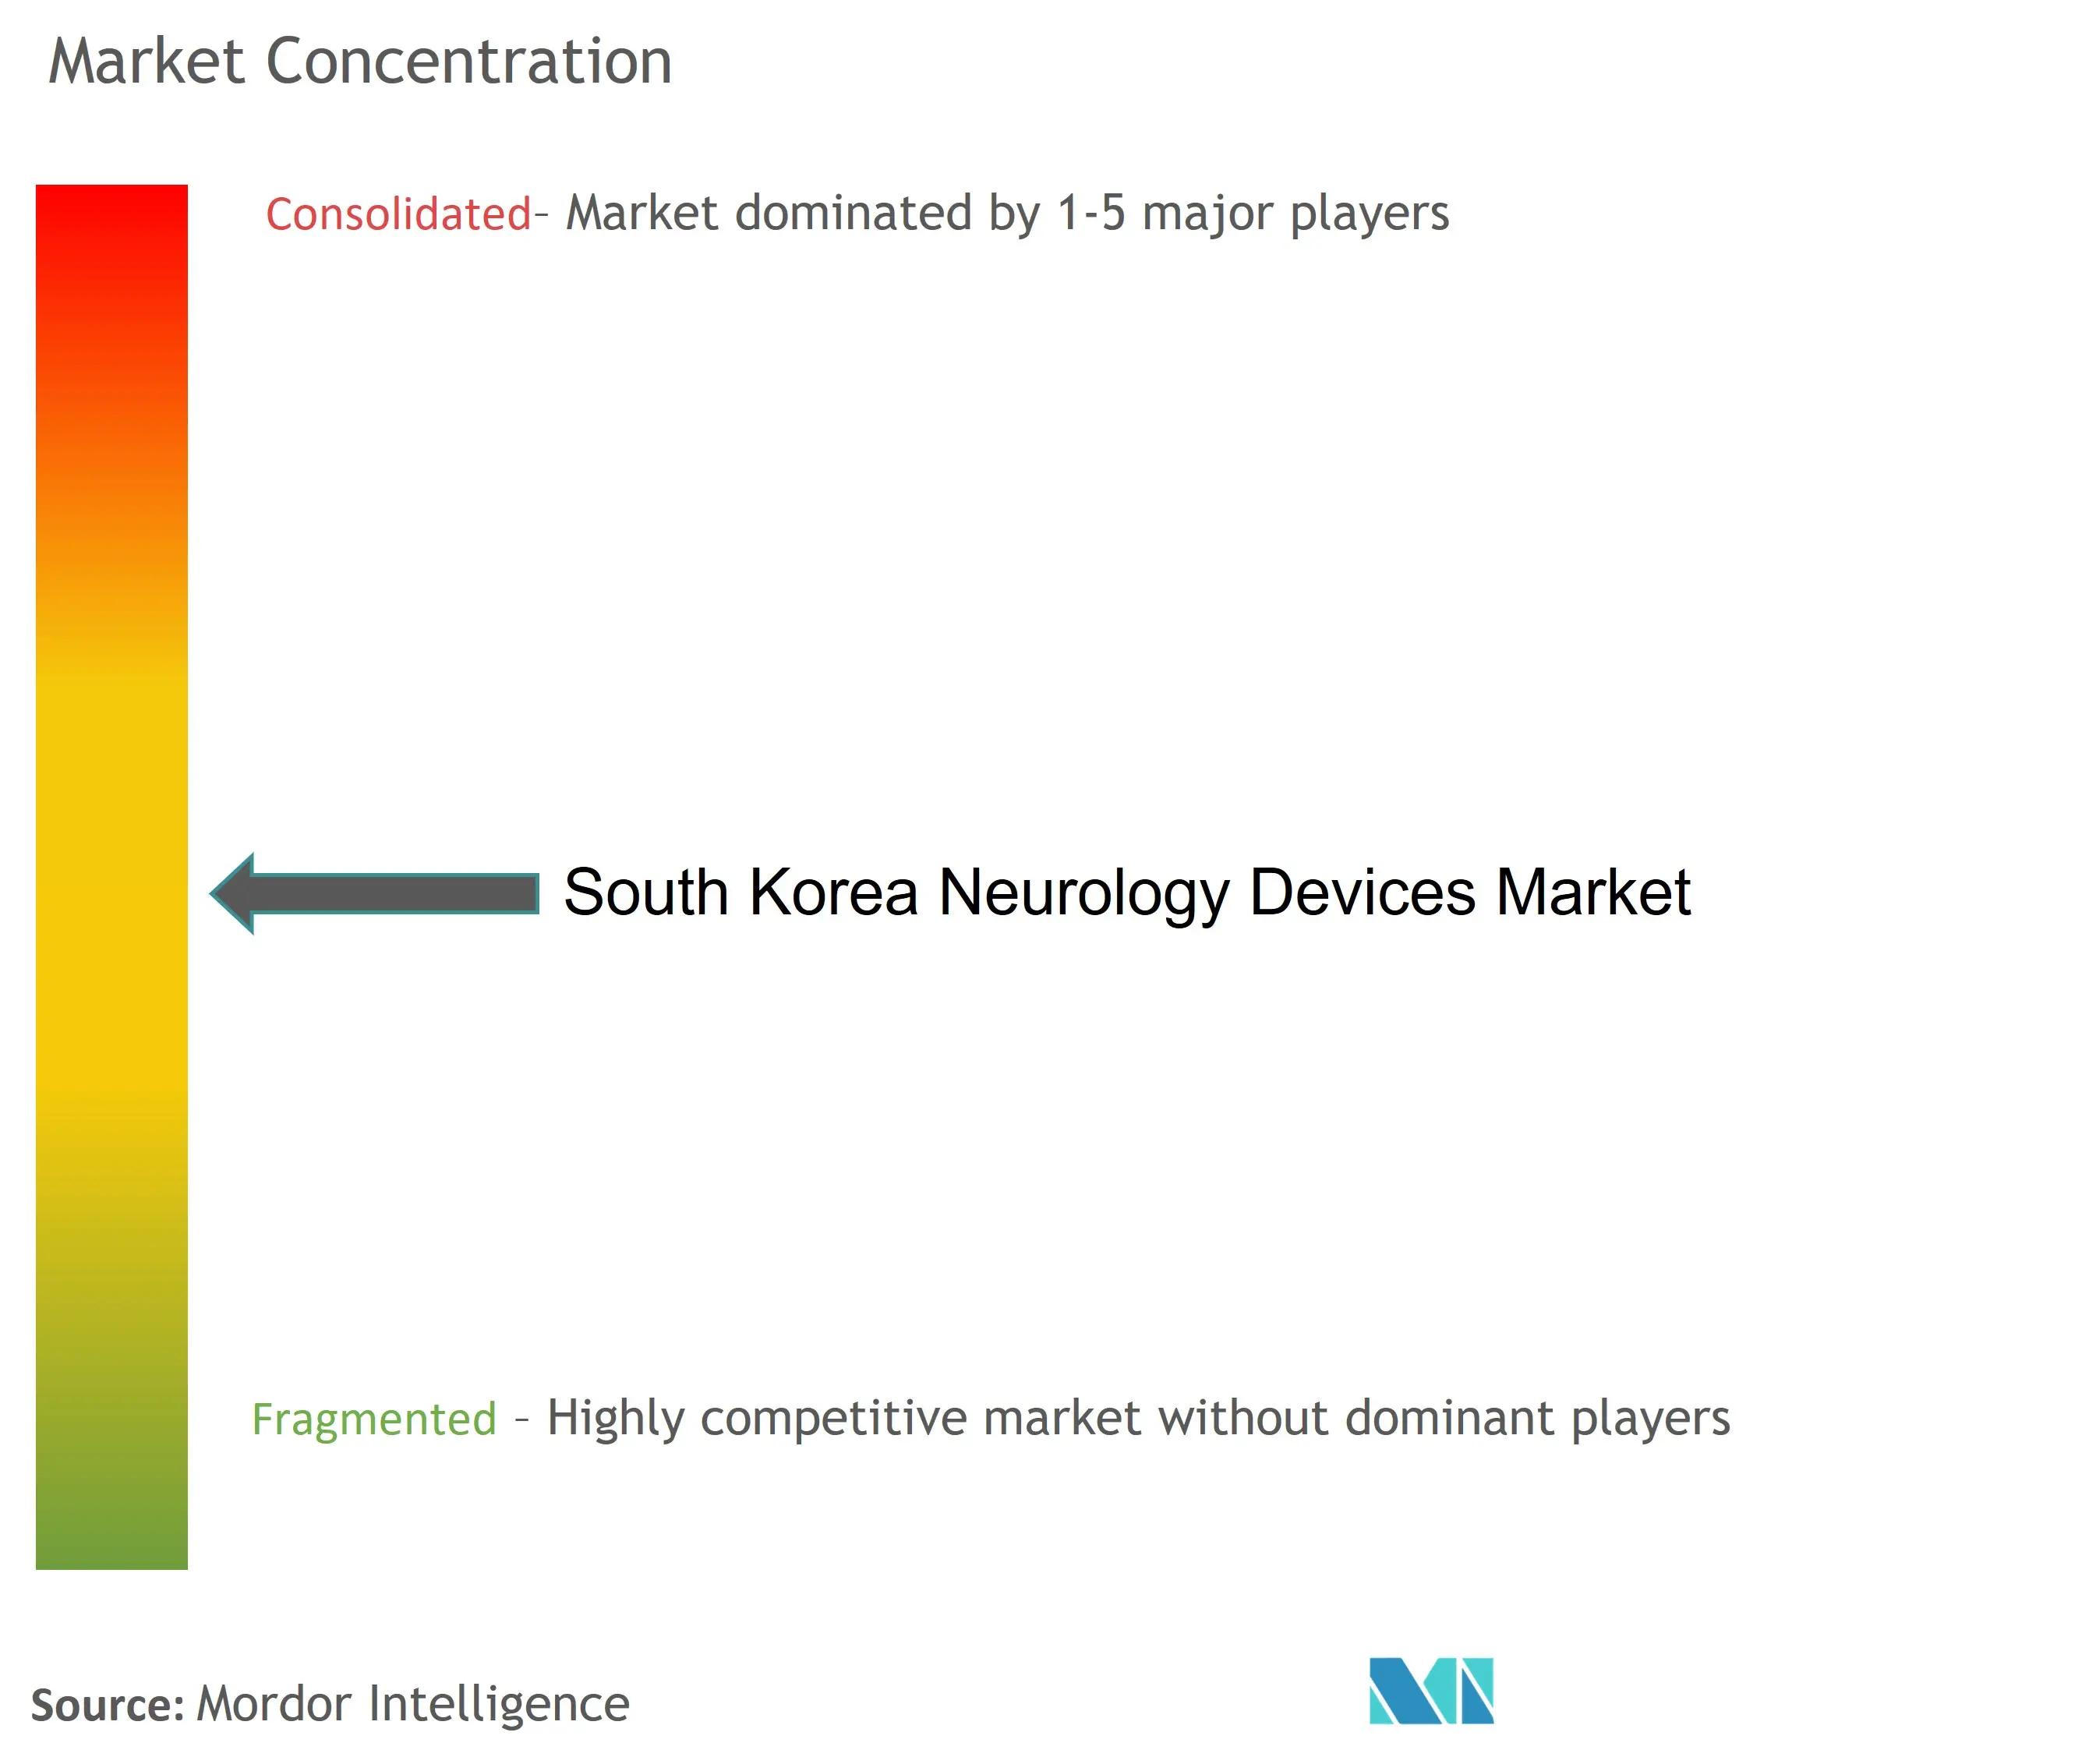 South Korea Neurology Devices Market Concentration